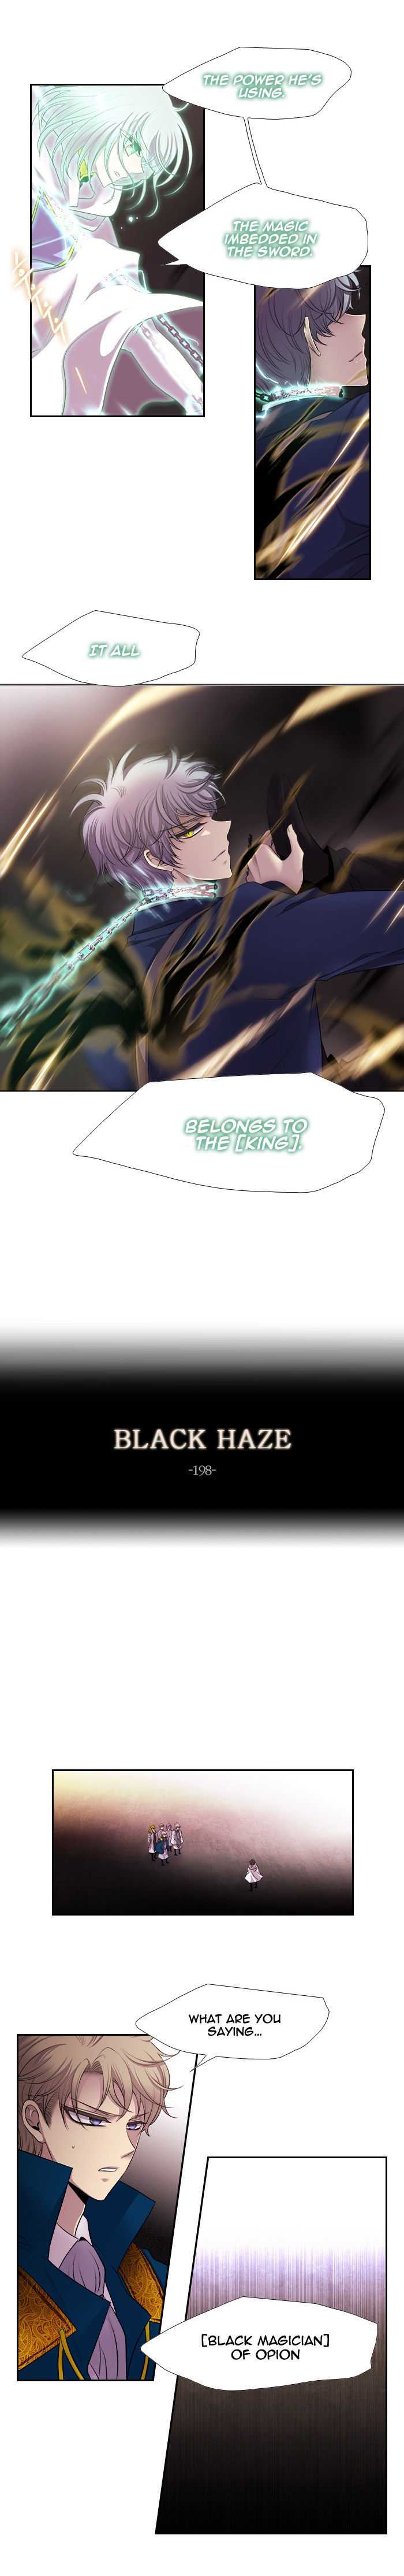 Black Haze Chapter 198 Page 4